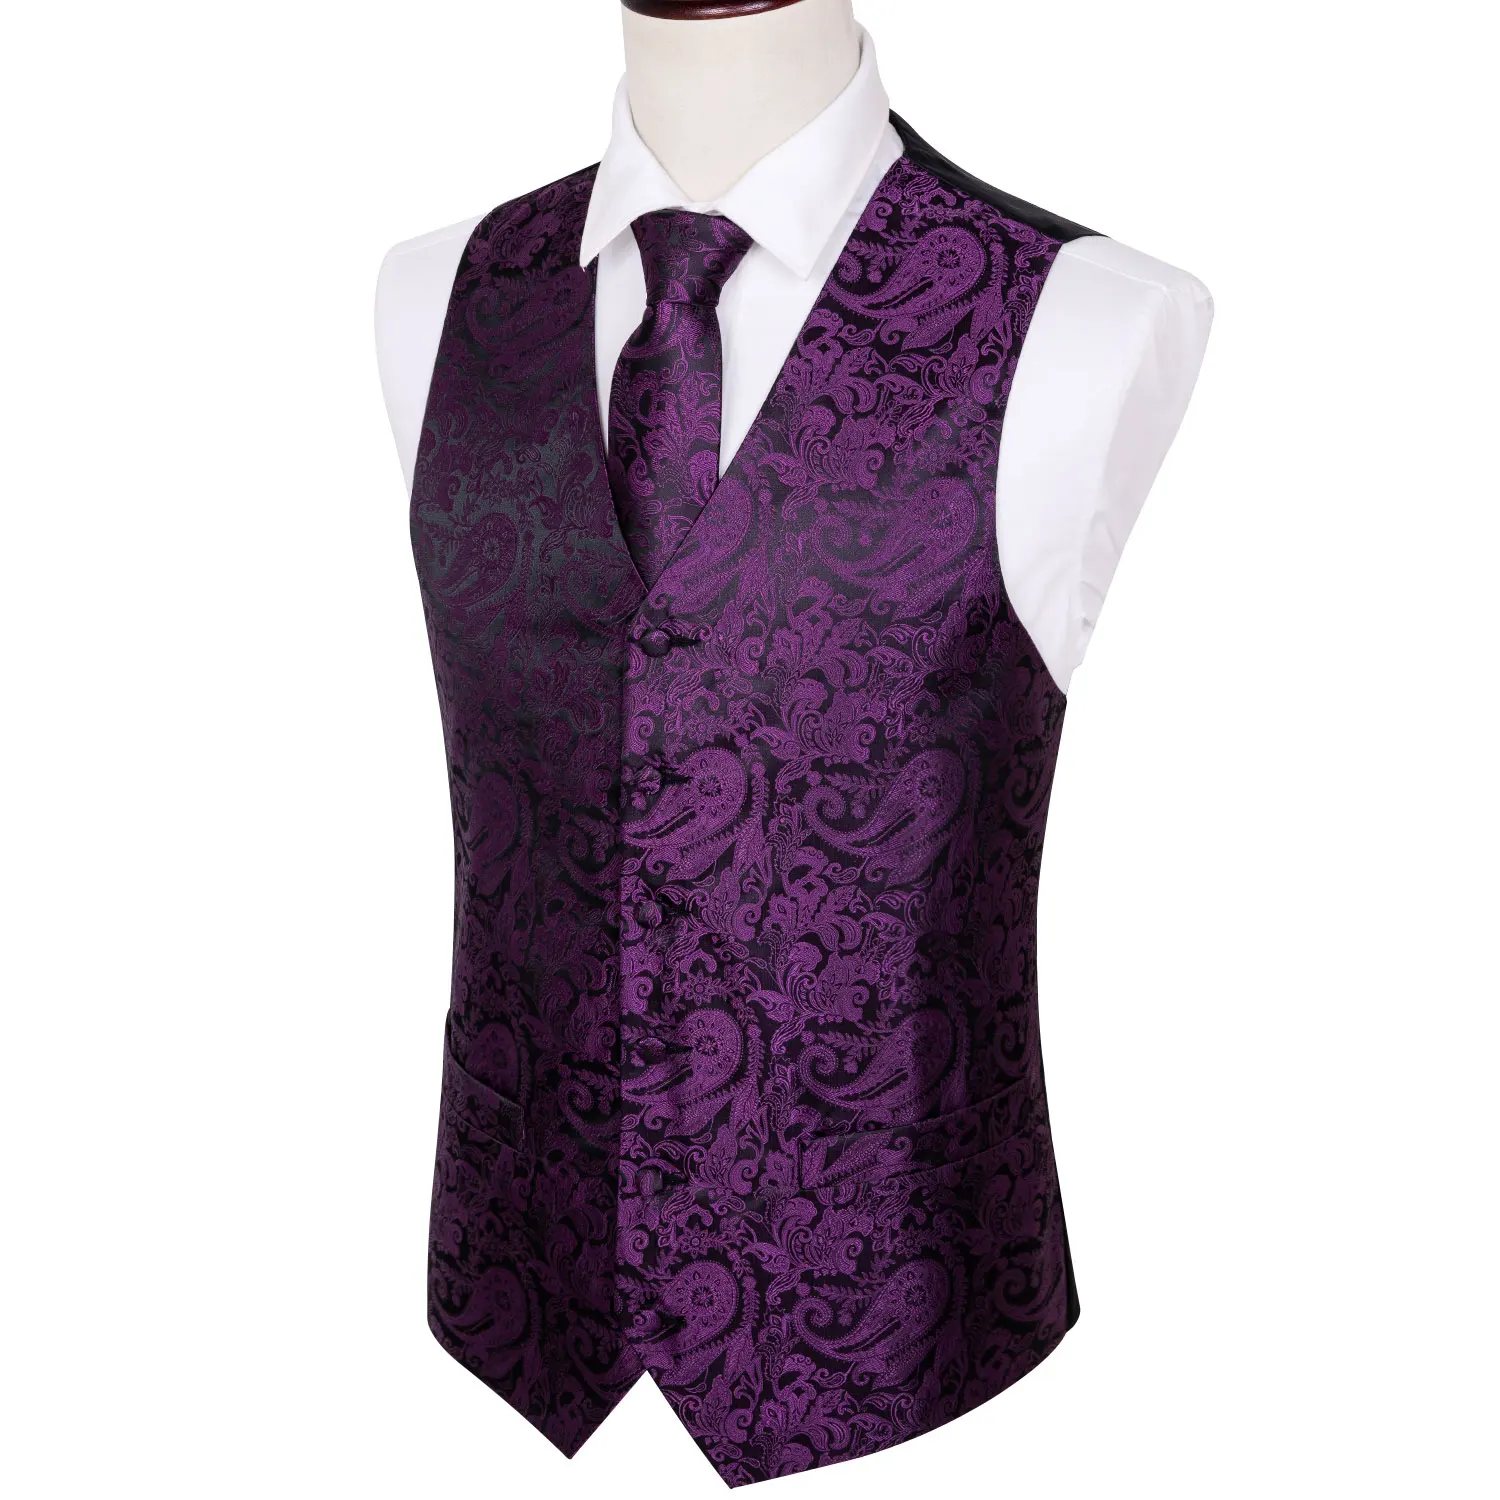 New Men's Paisley Tuxedo Vest Waistcoat & necktie & Bow tie & Hankie purple prom